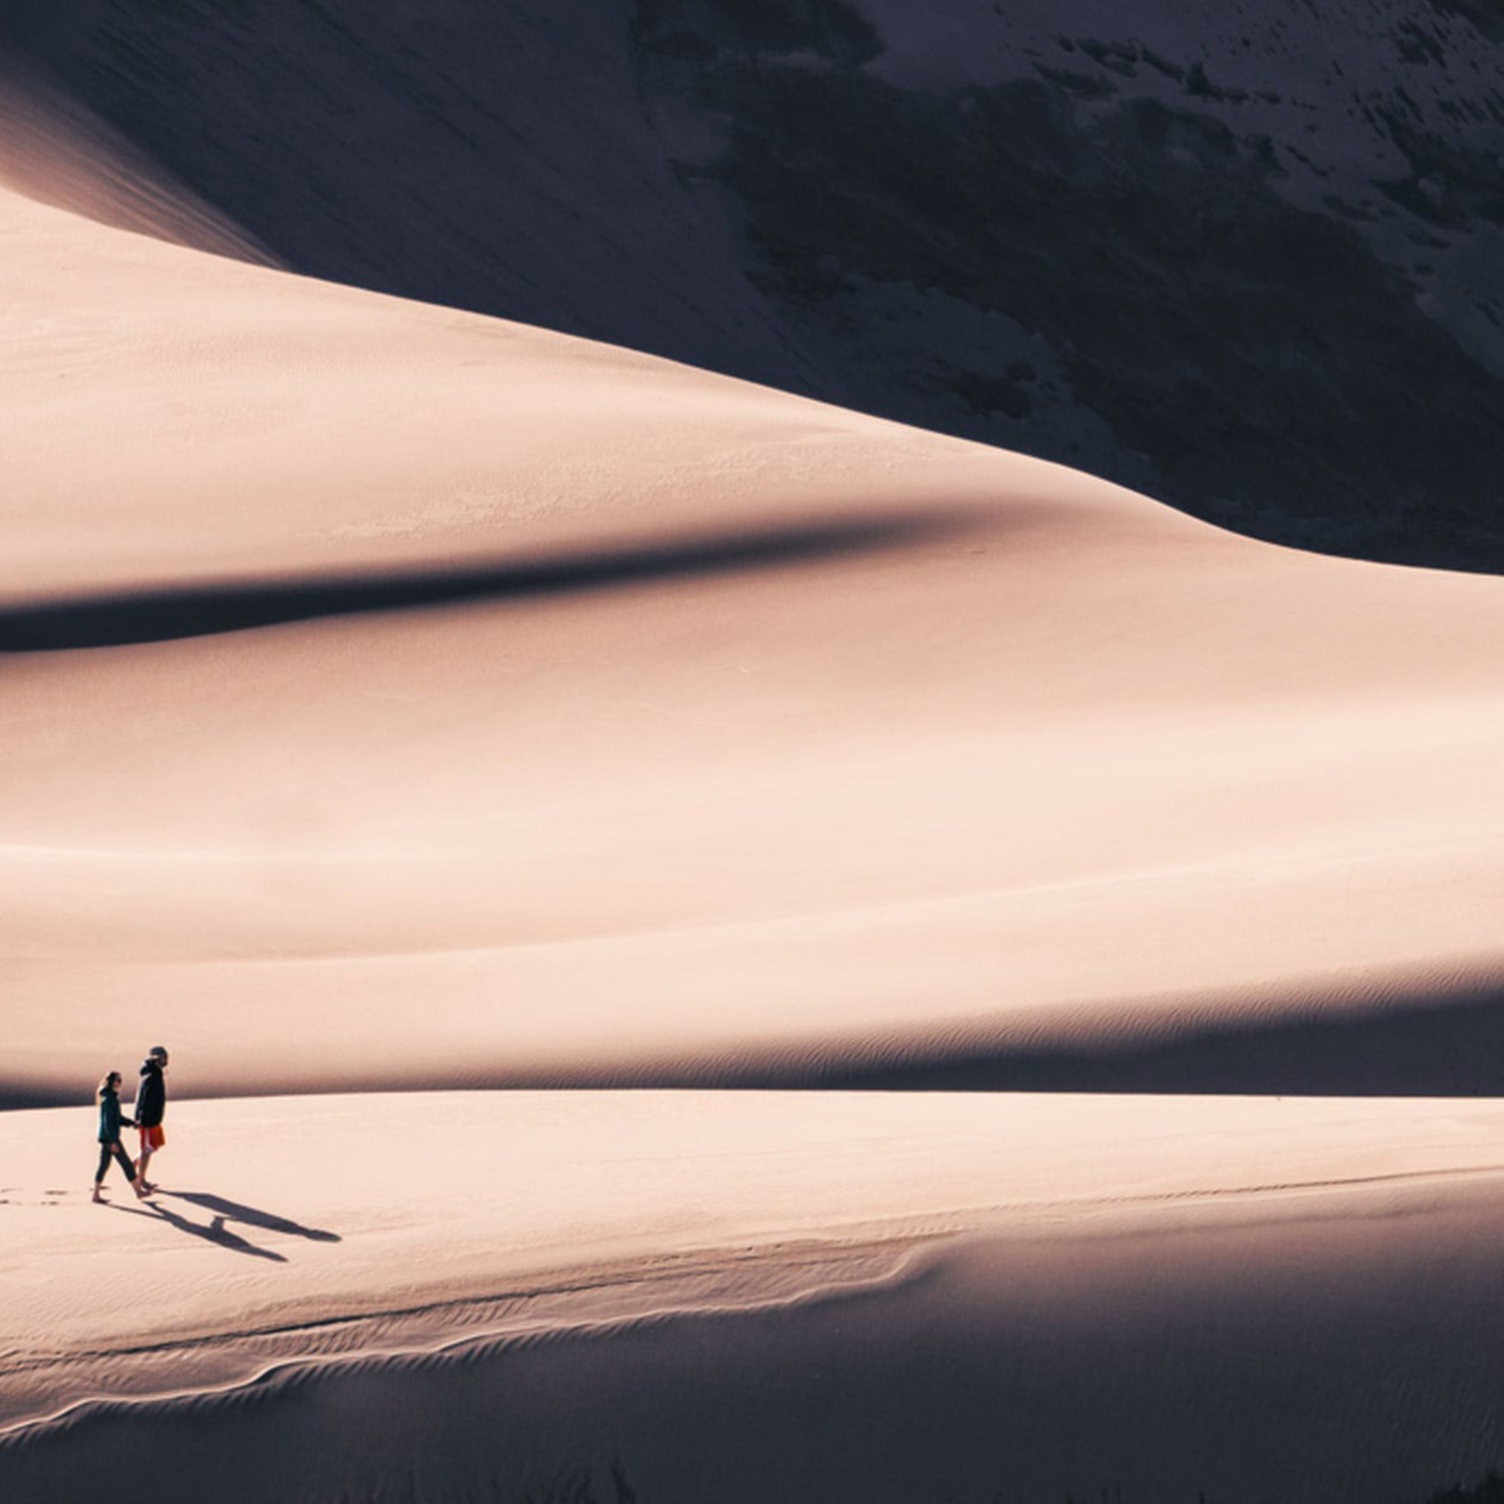 Two people walking on sand dunes